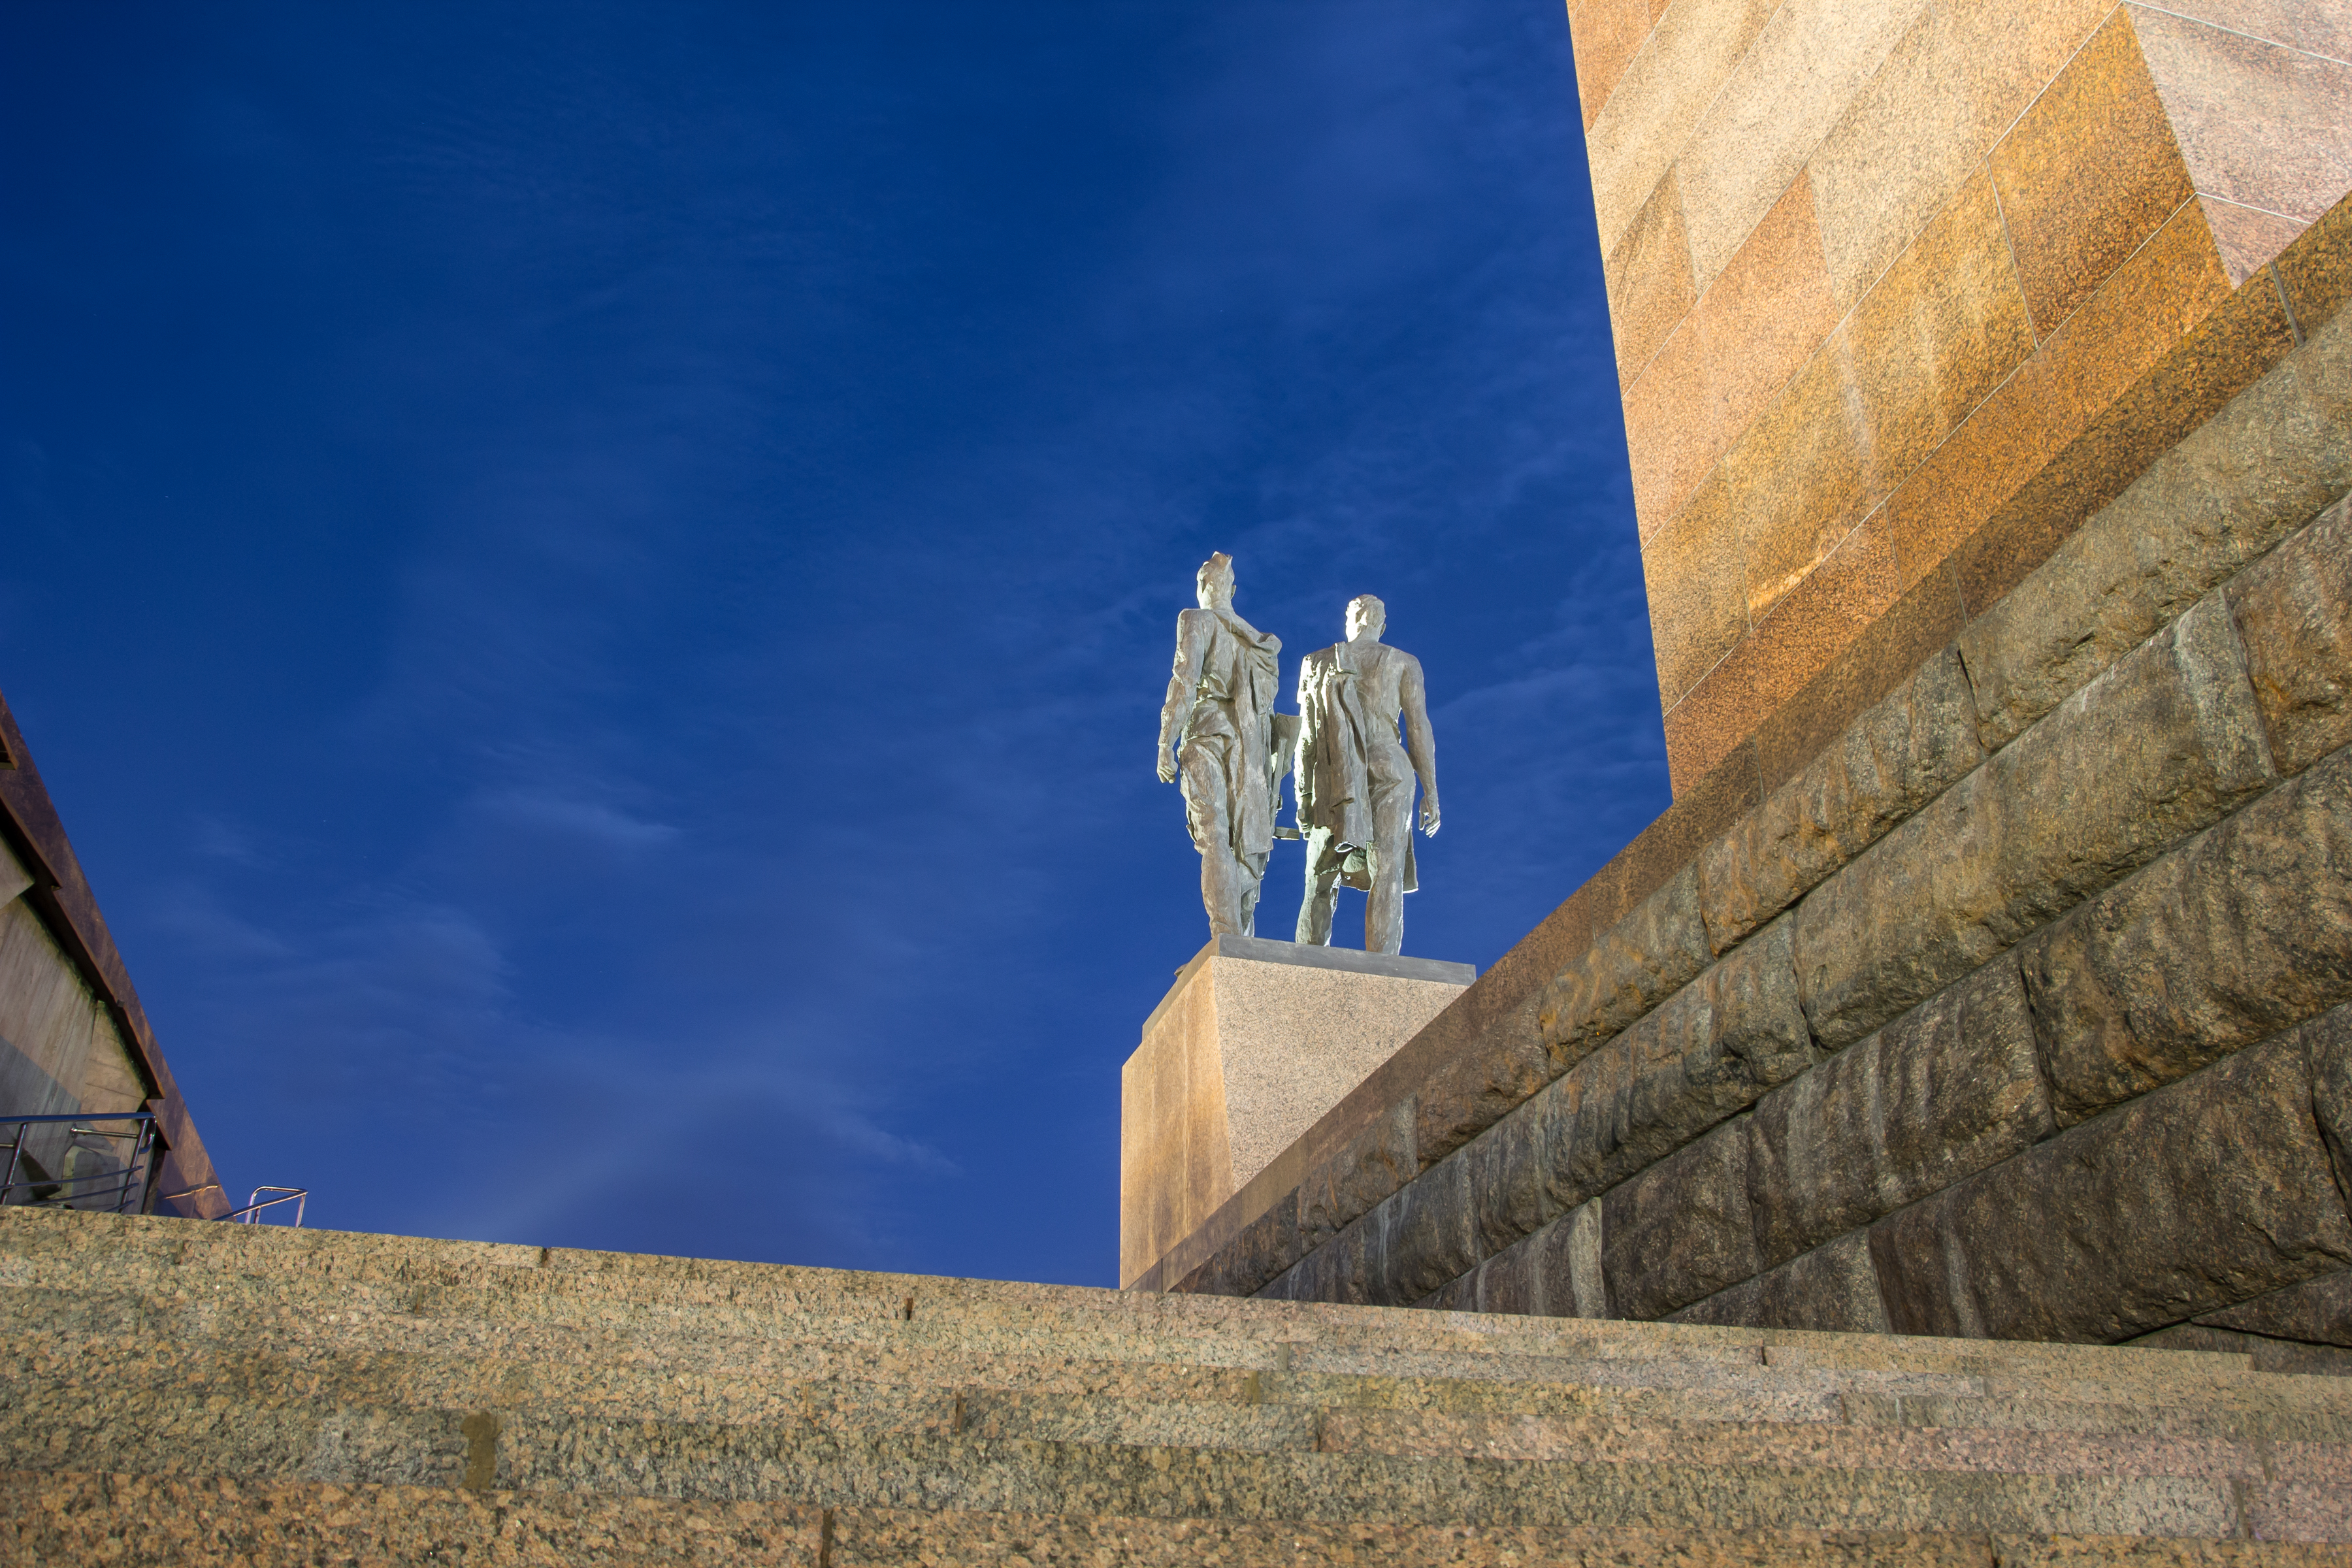 Monument to the Heroic Defenders of Leningrad, Architecture, Patriotism, Statue, Soviet, HQ Photo